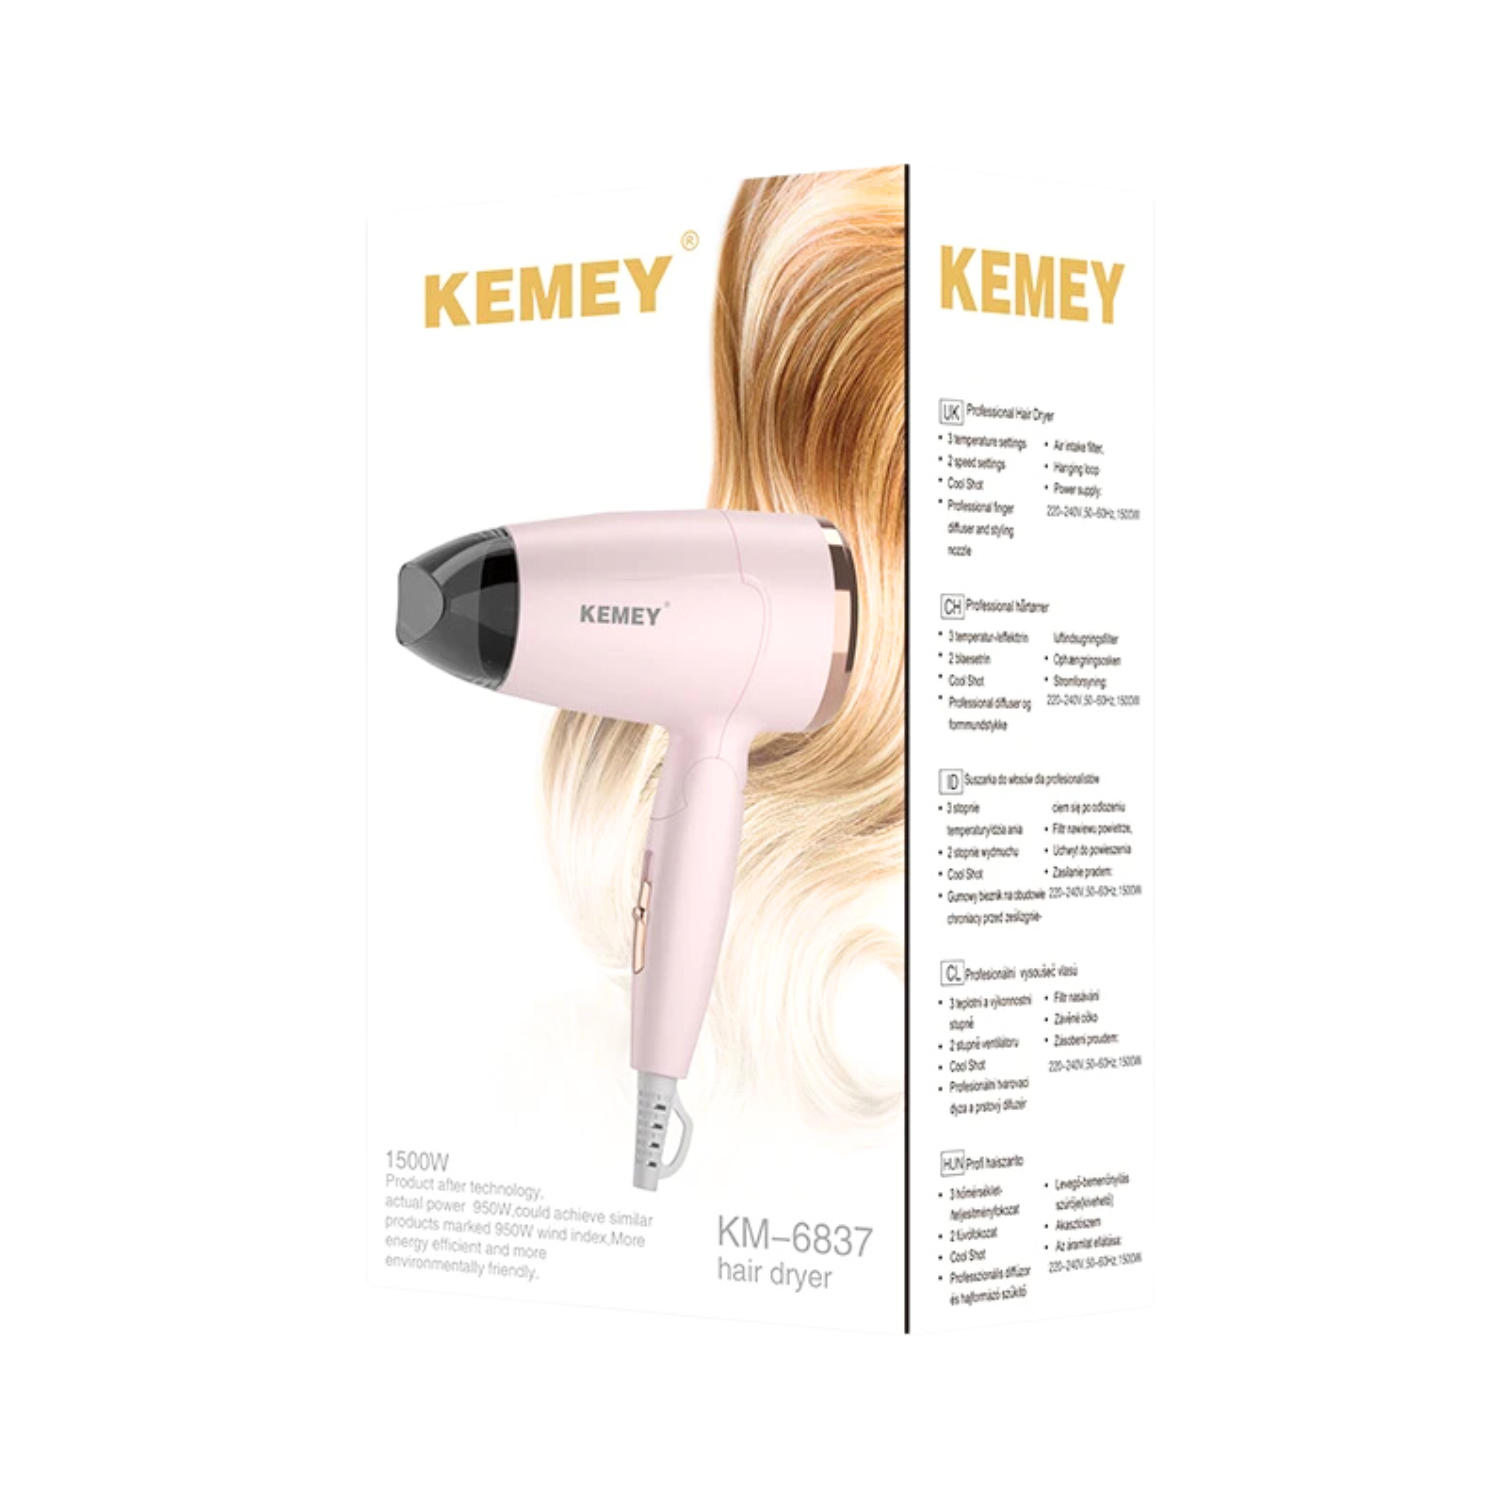 kemey-km-6837-professional-hair-dryer